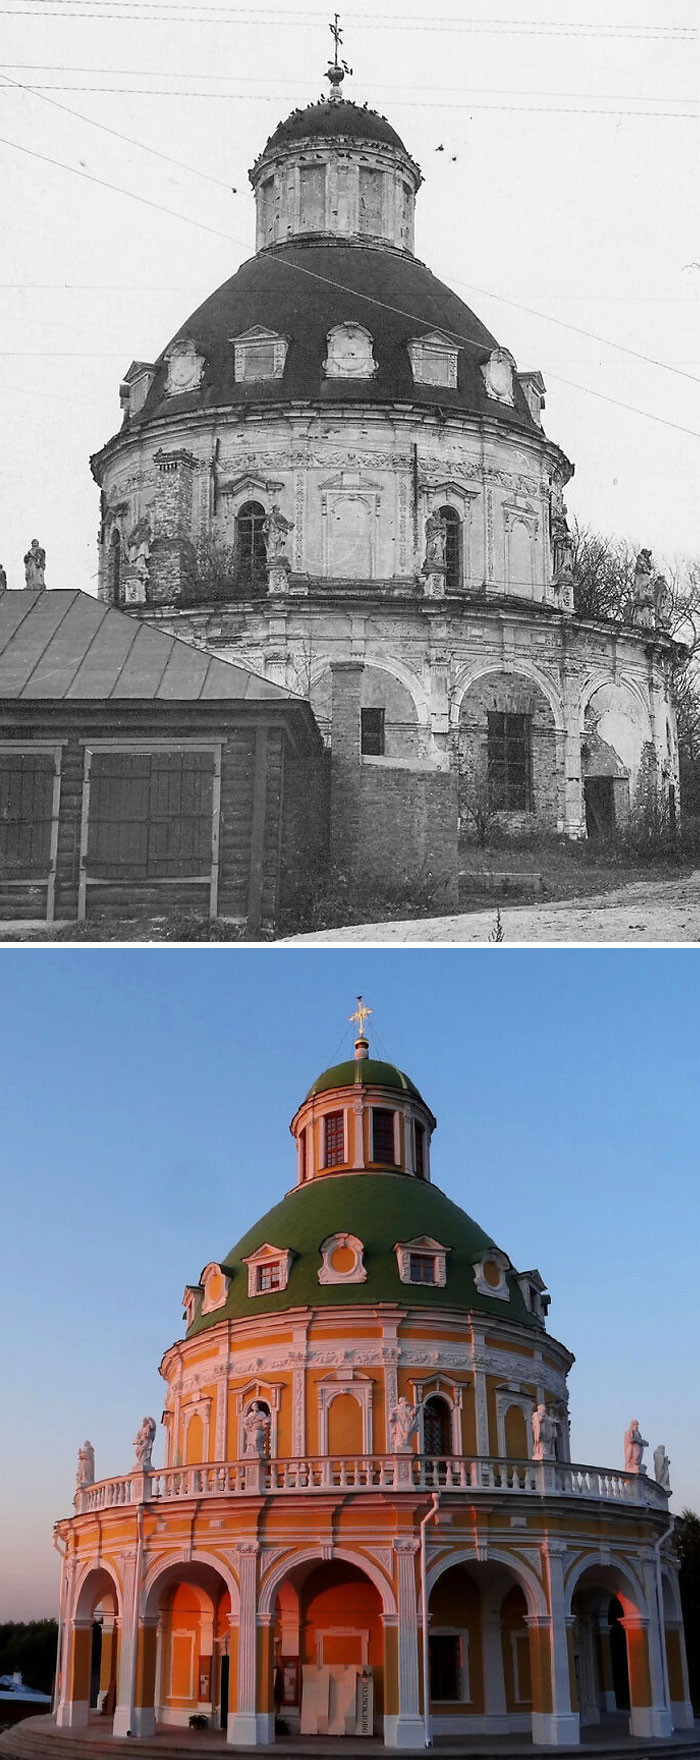 30. Renovation of a Church in Podmoklovo, Russia